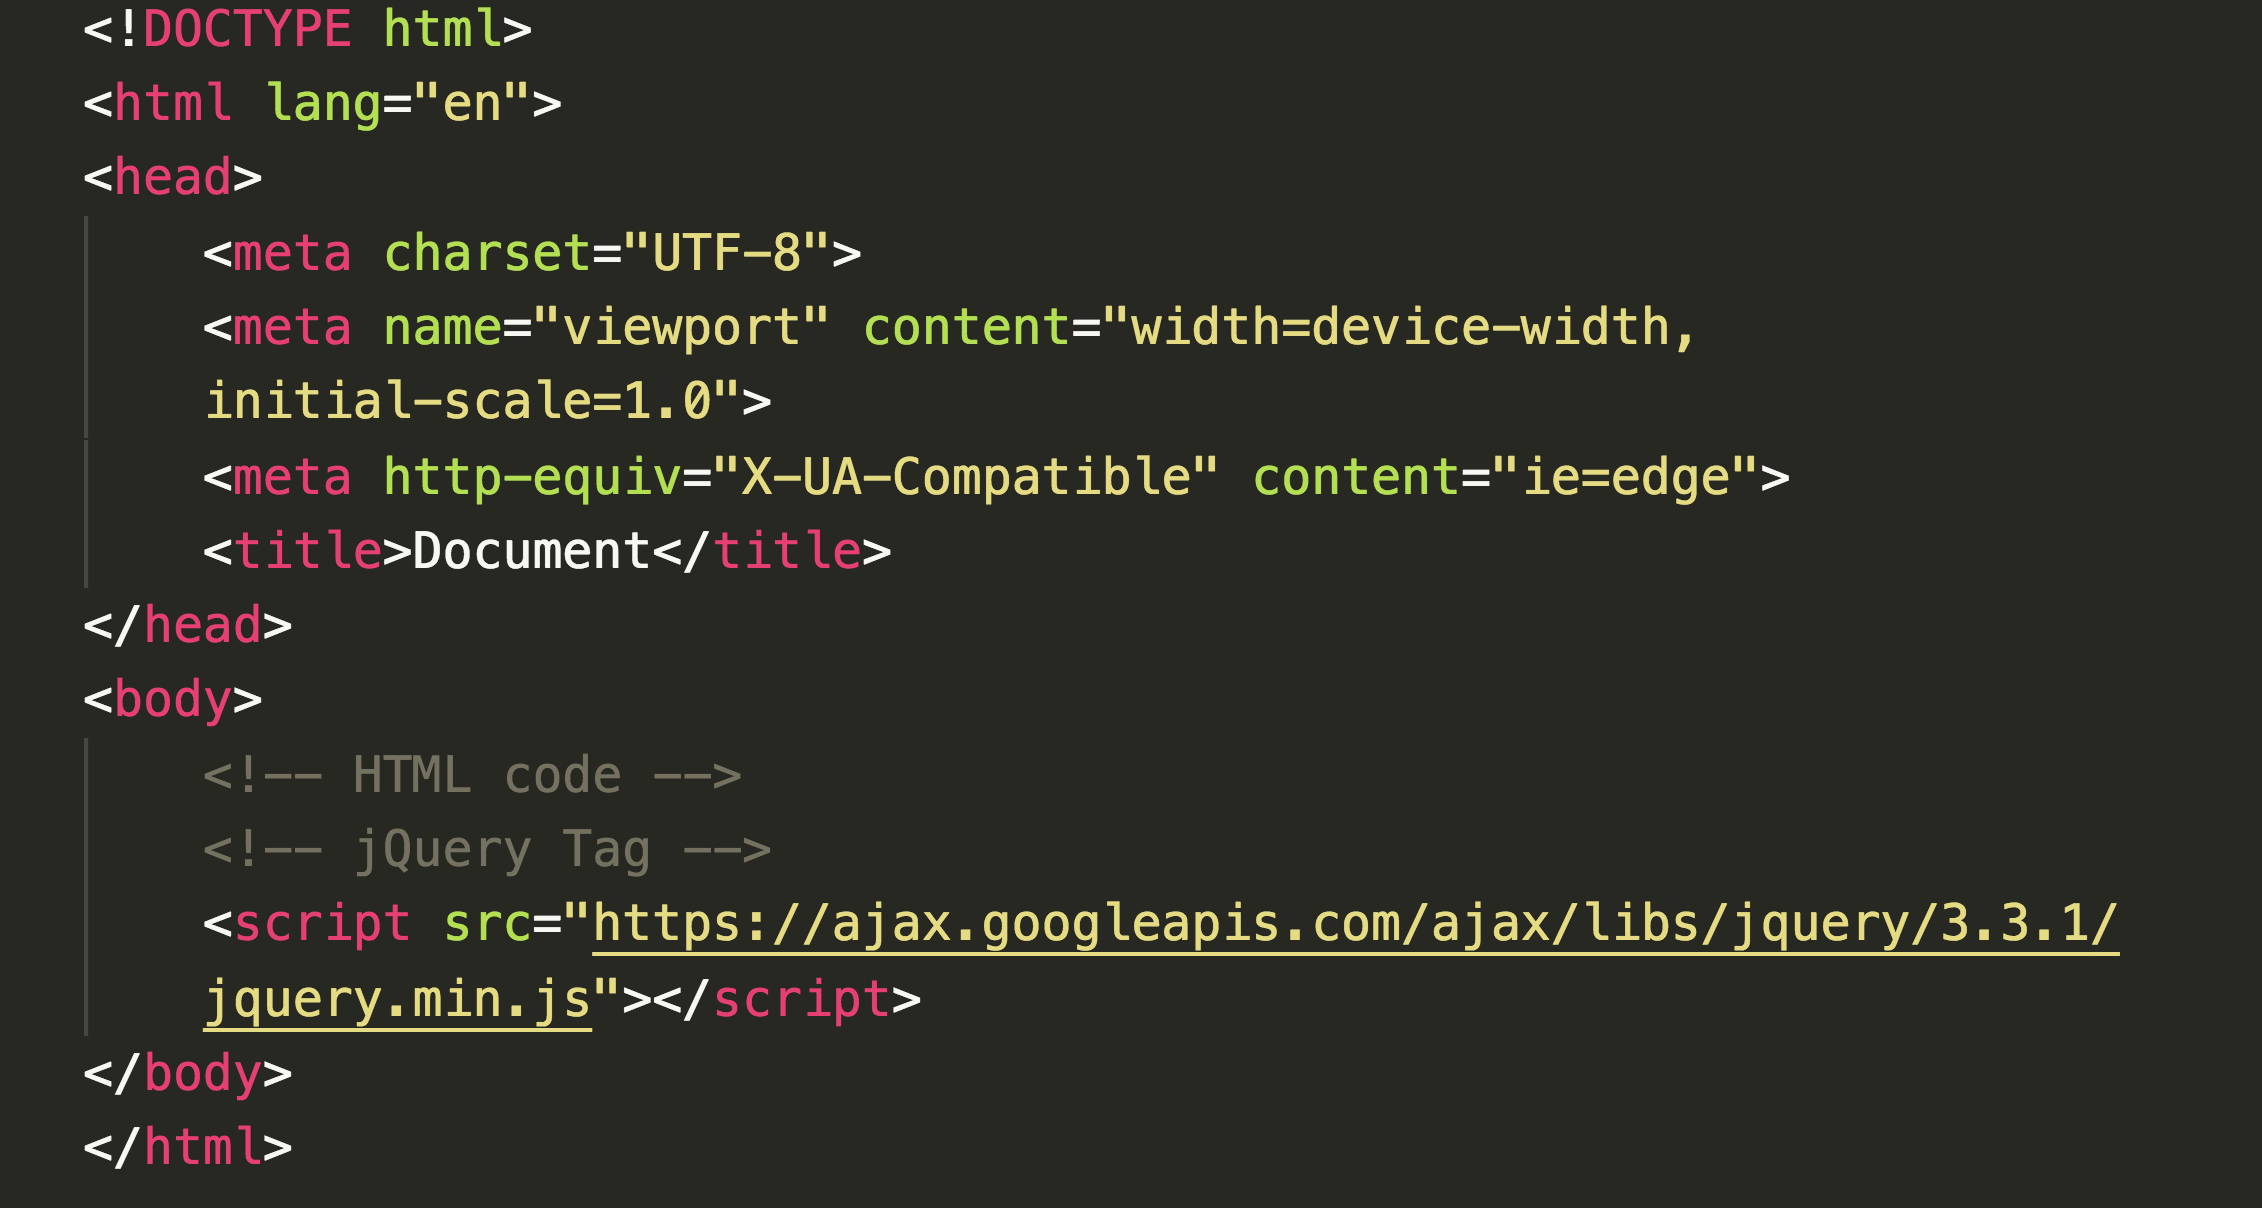 HTML example